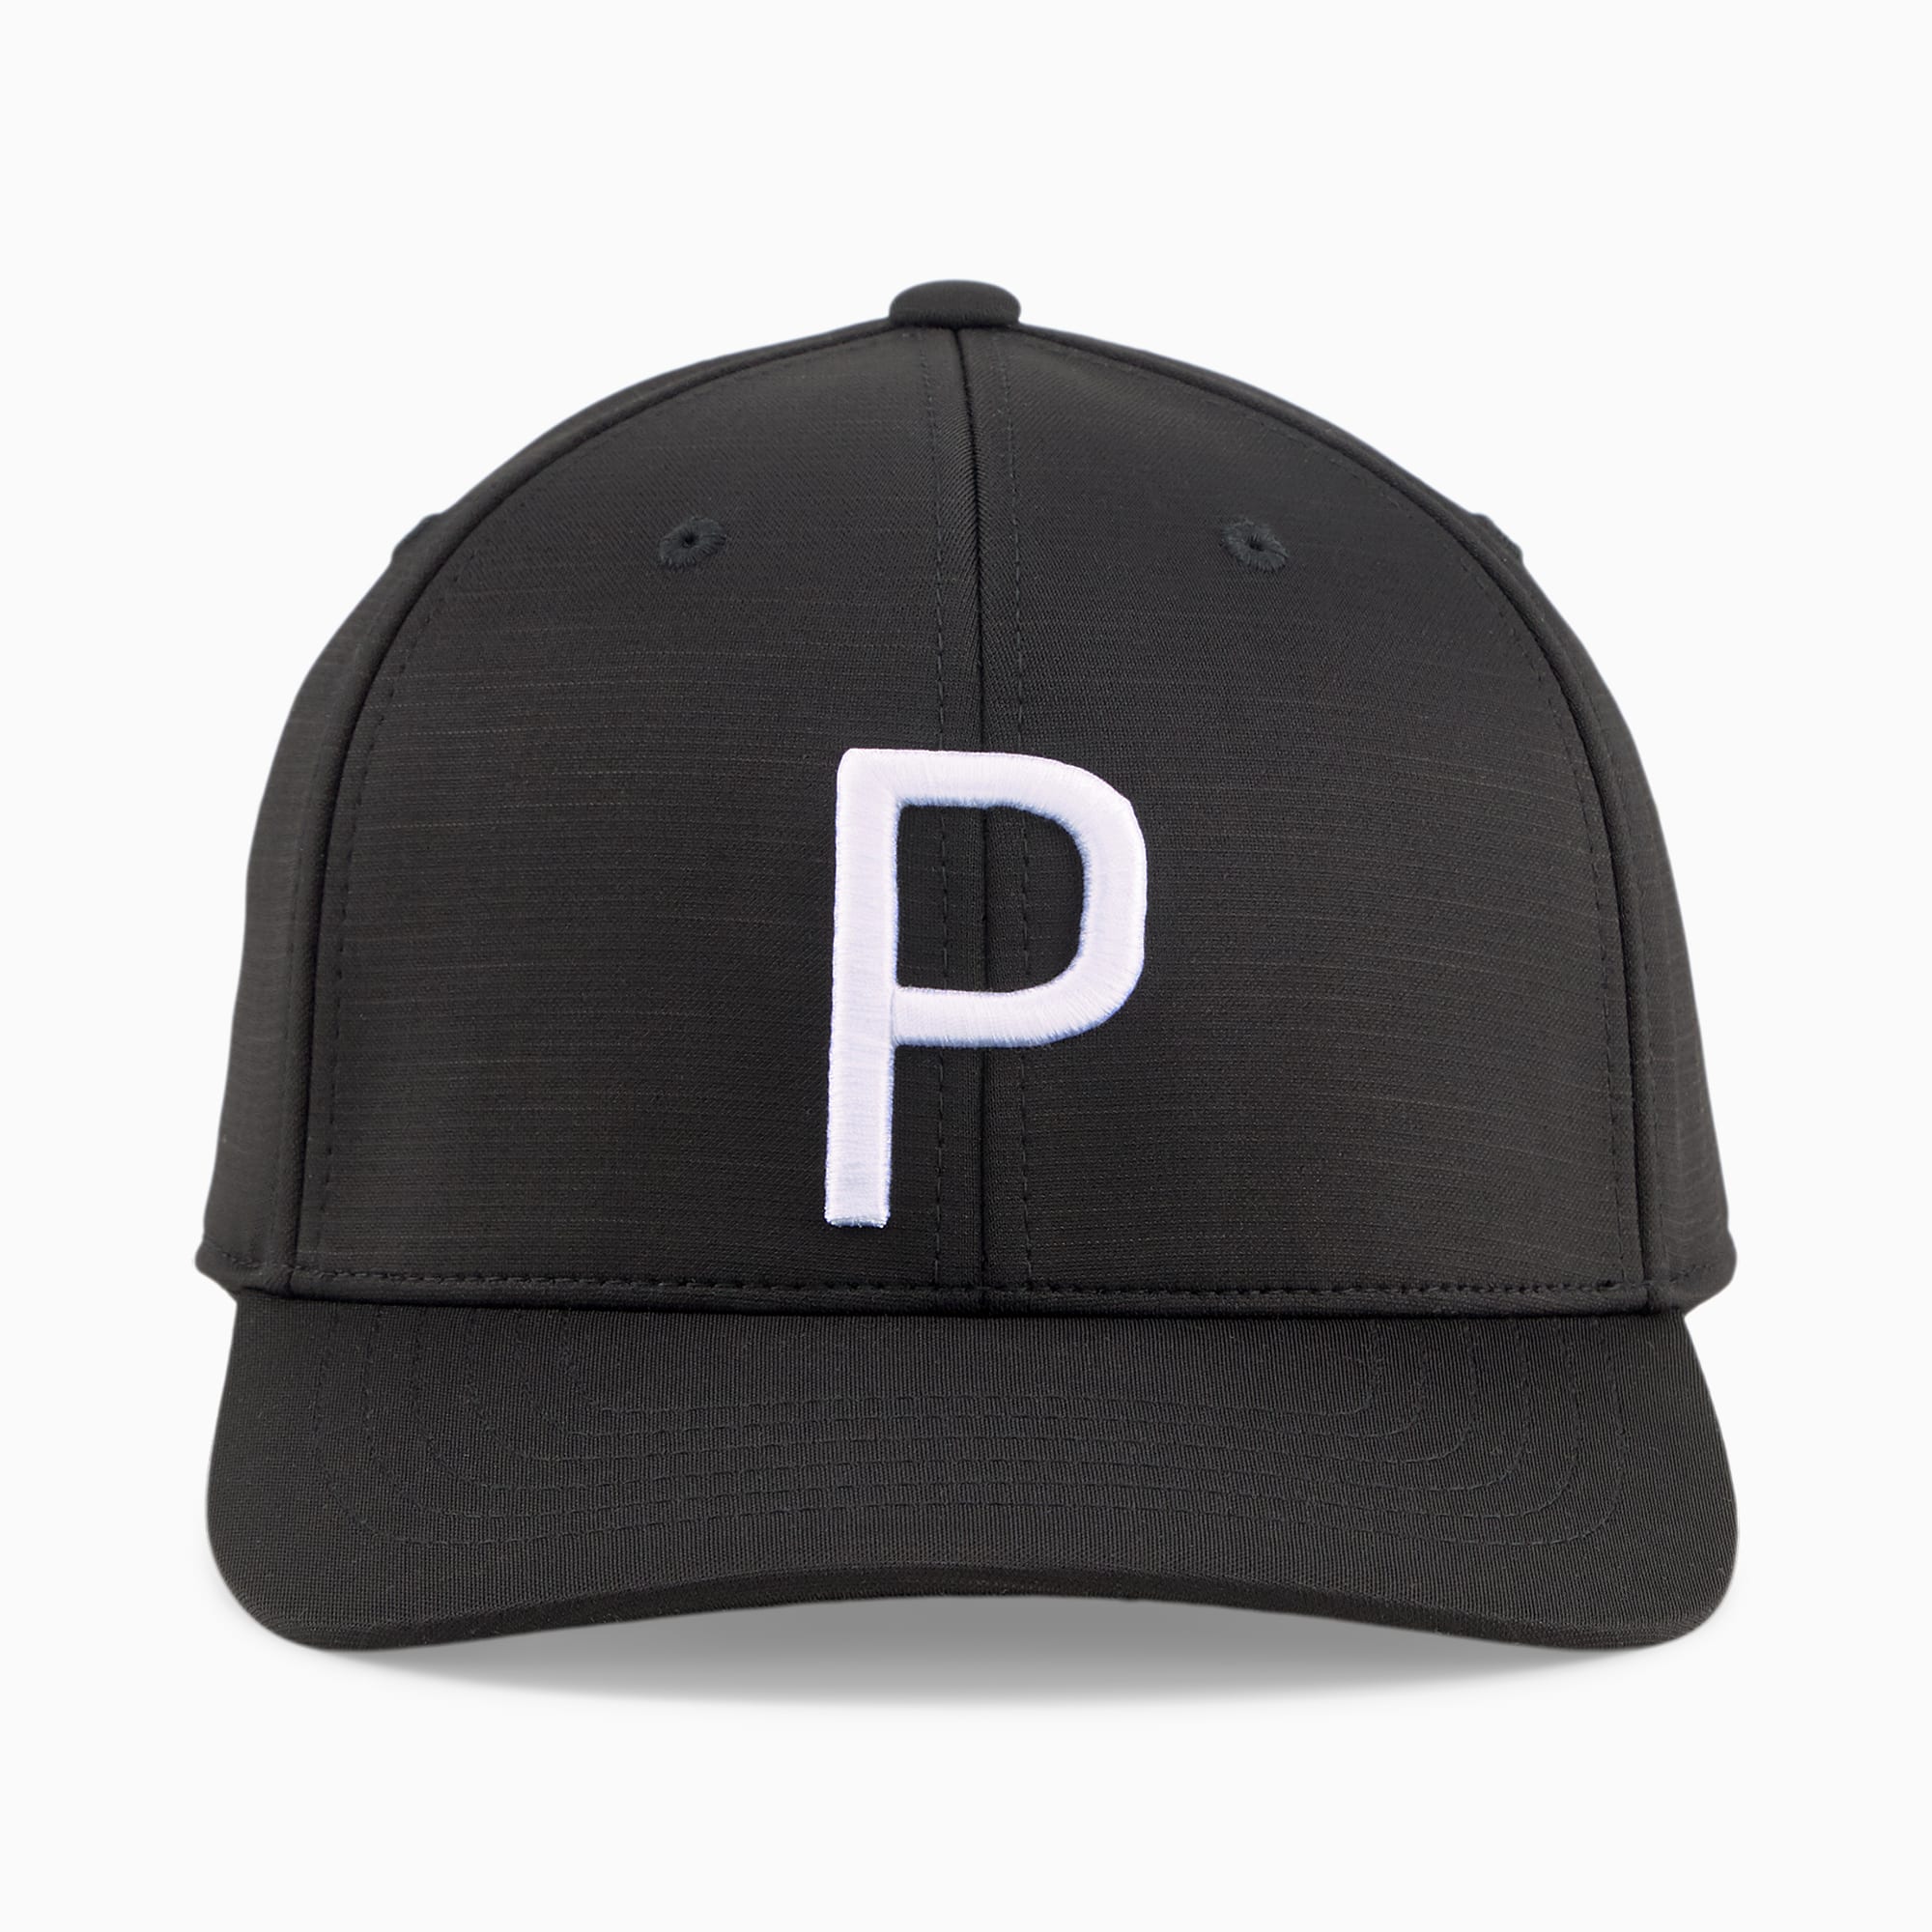 Men's PUMA P Golf Cap, Black/White Glow, Accessories